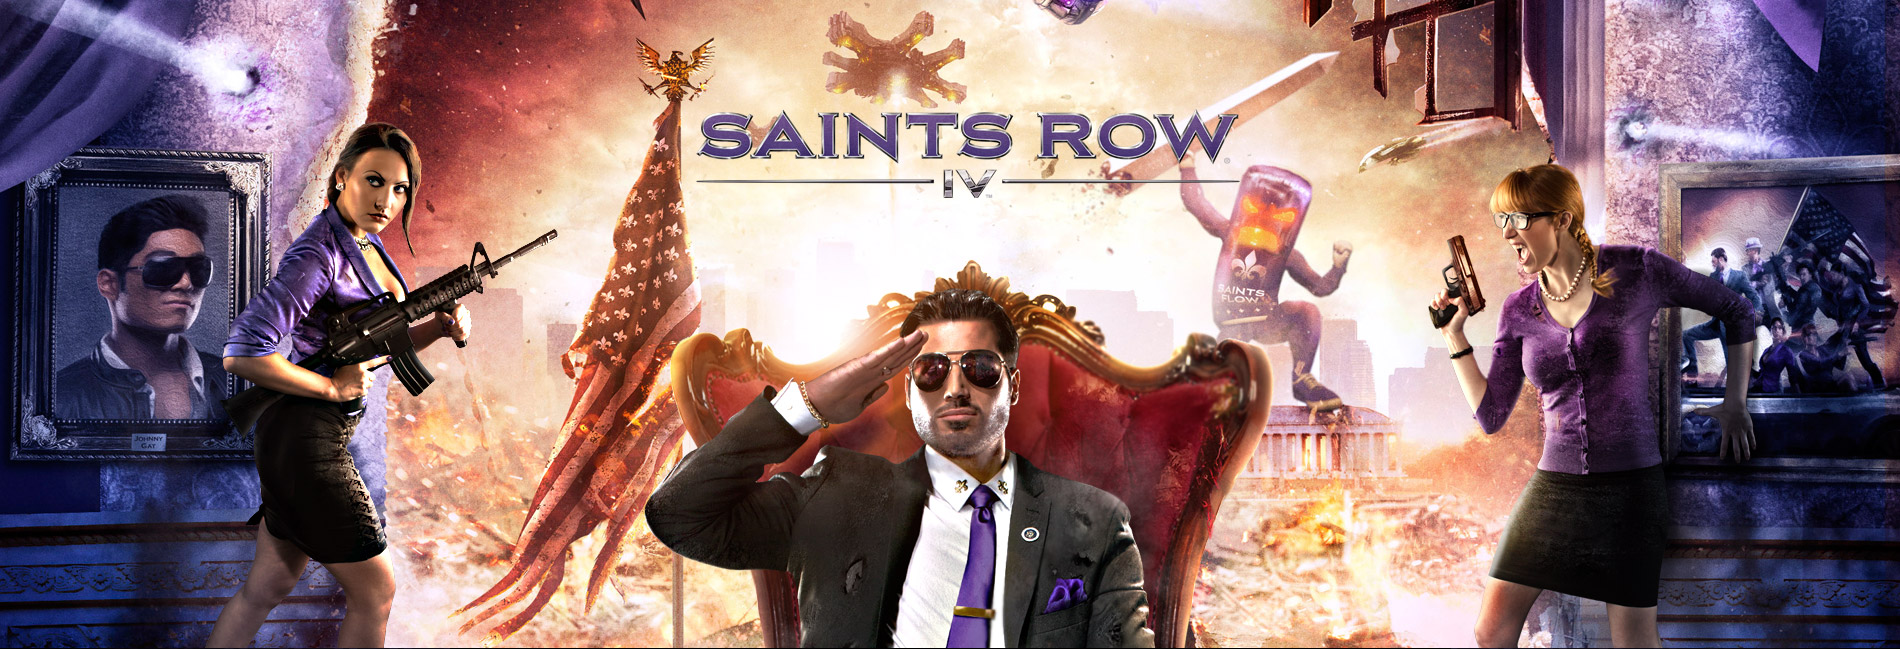 saints row 3 download